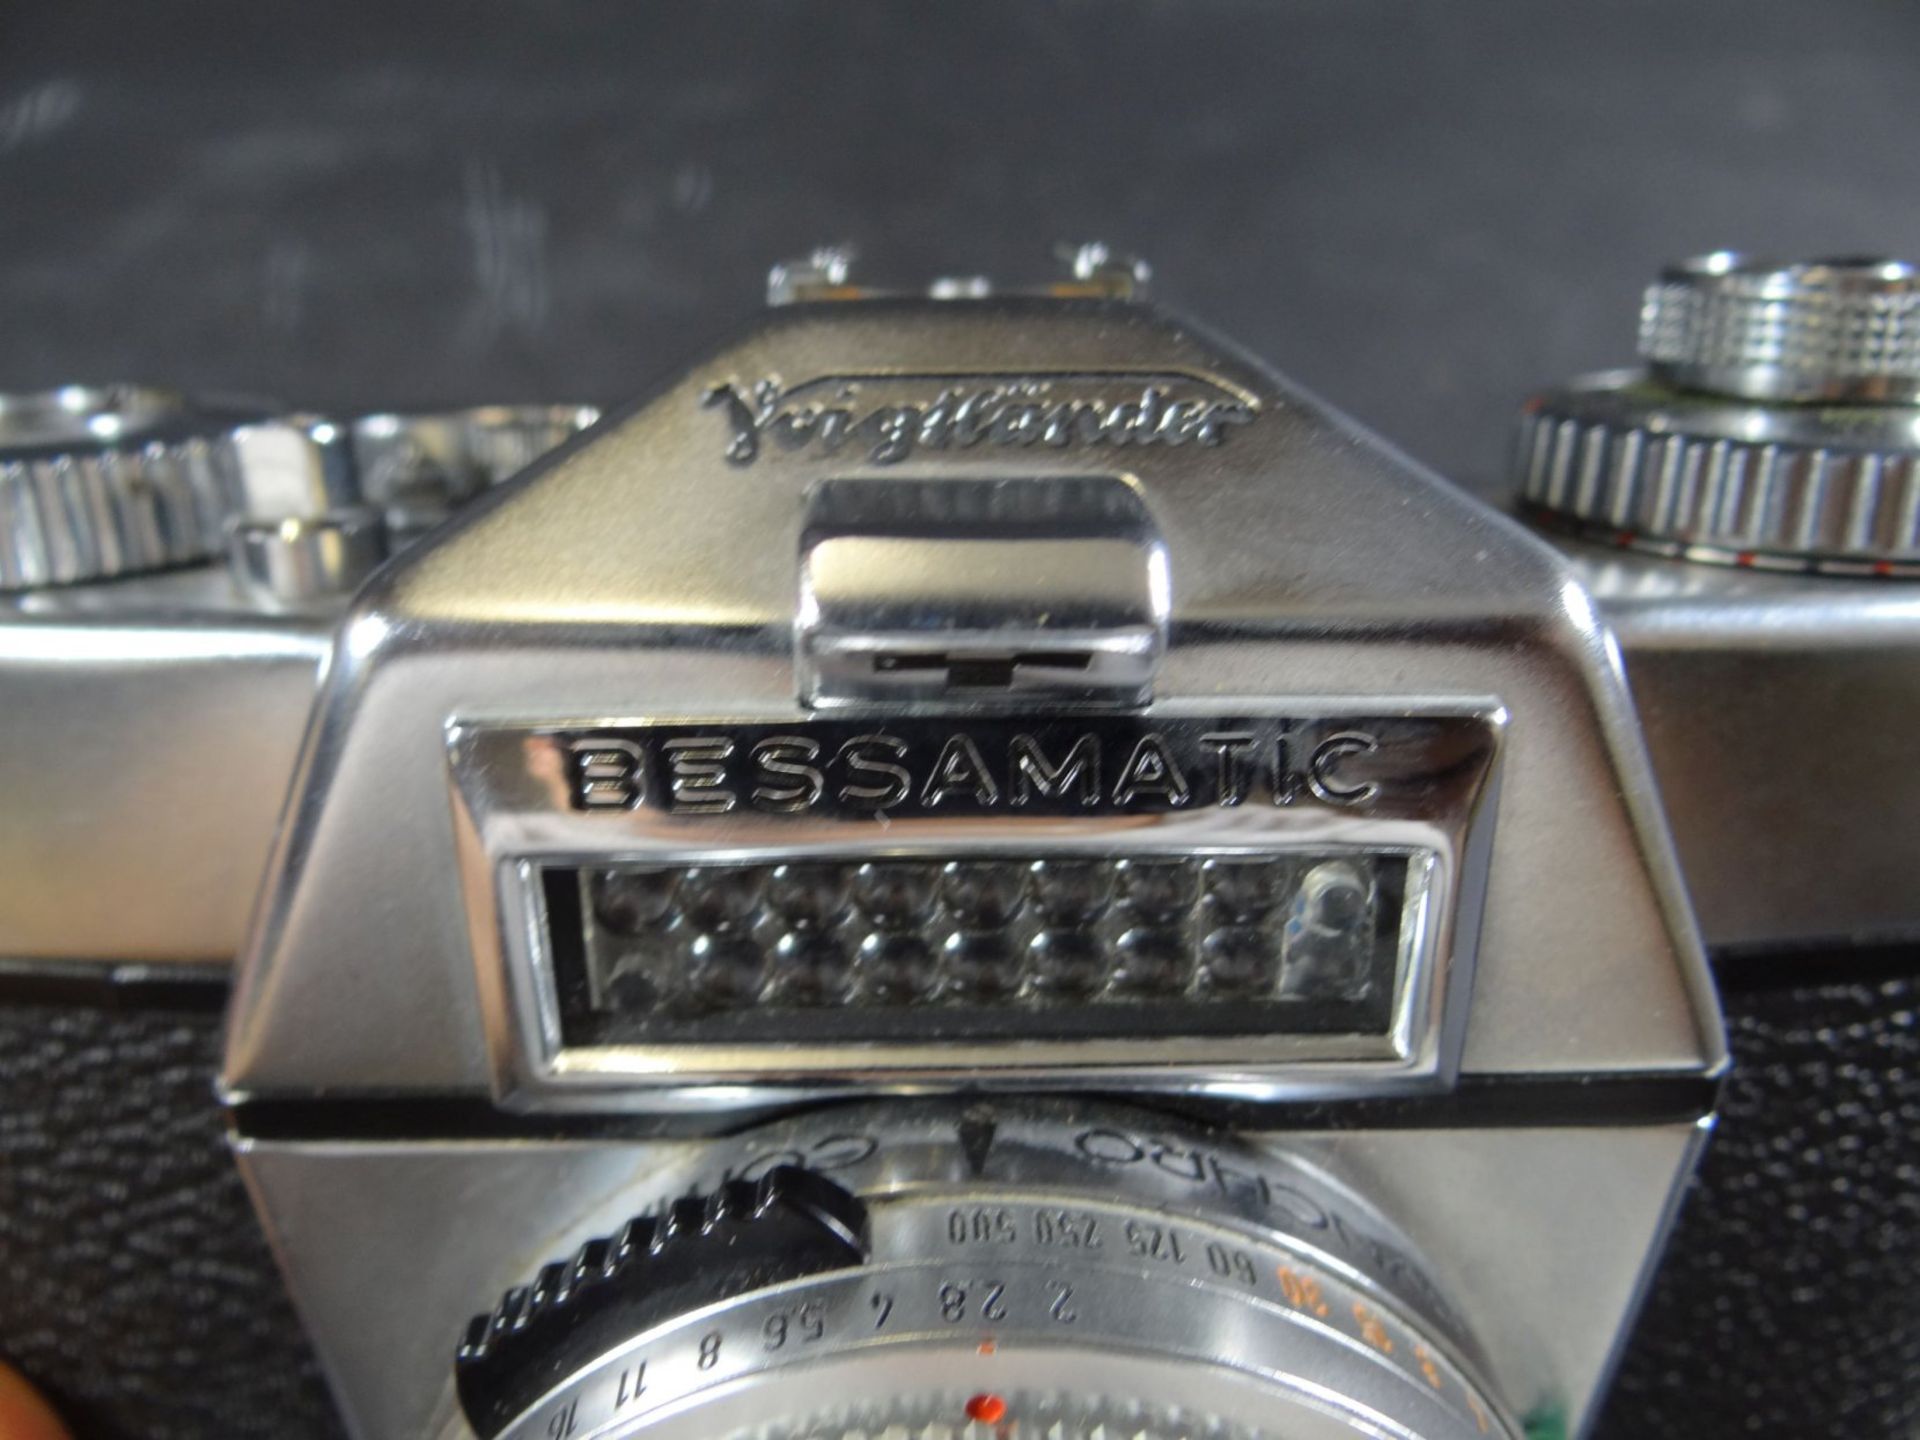 Voigtländer Bessamatic mit Color-Skopar X 1:2.8 50mm Objektiv, guter Zustan - Bild 2 aus 4